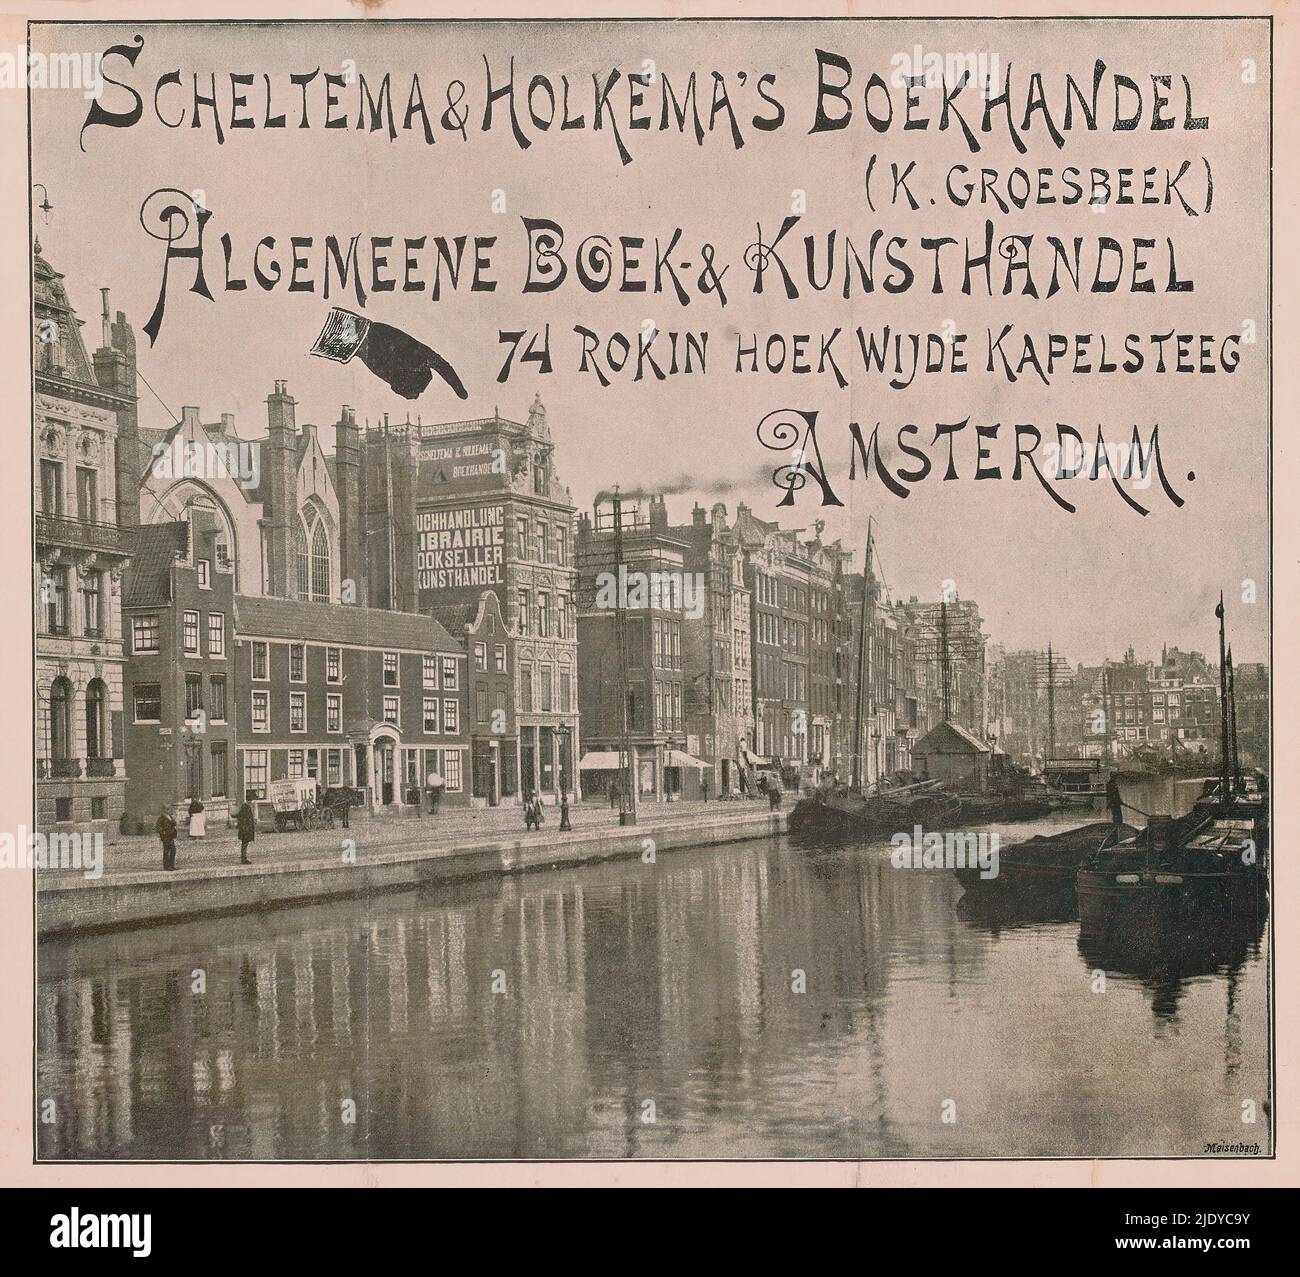 Scheltema & Holkema's Boekhandel, Scheltema & Holkema's Boekhandel (K. Groesbeek) Algemeene Boek- & Kunsthandel 74 Rokin hoek Wijde Kapelsteeg Amsterdam (titolo sull'oggetto), vista del Rokin verso Piazza Dam con Scheltema & Holkema's Boekhandel al numero 74, all'angolo con Wijde Kapelsteeg., Georg Meisenbach, (menzionato sull'oggetto), in o dopo il 1893, o prima del 1885, in carta, o dopo altezza 224 mm x larghezza 251 mm Foto Stock